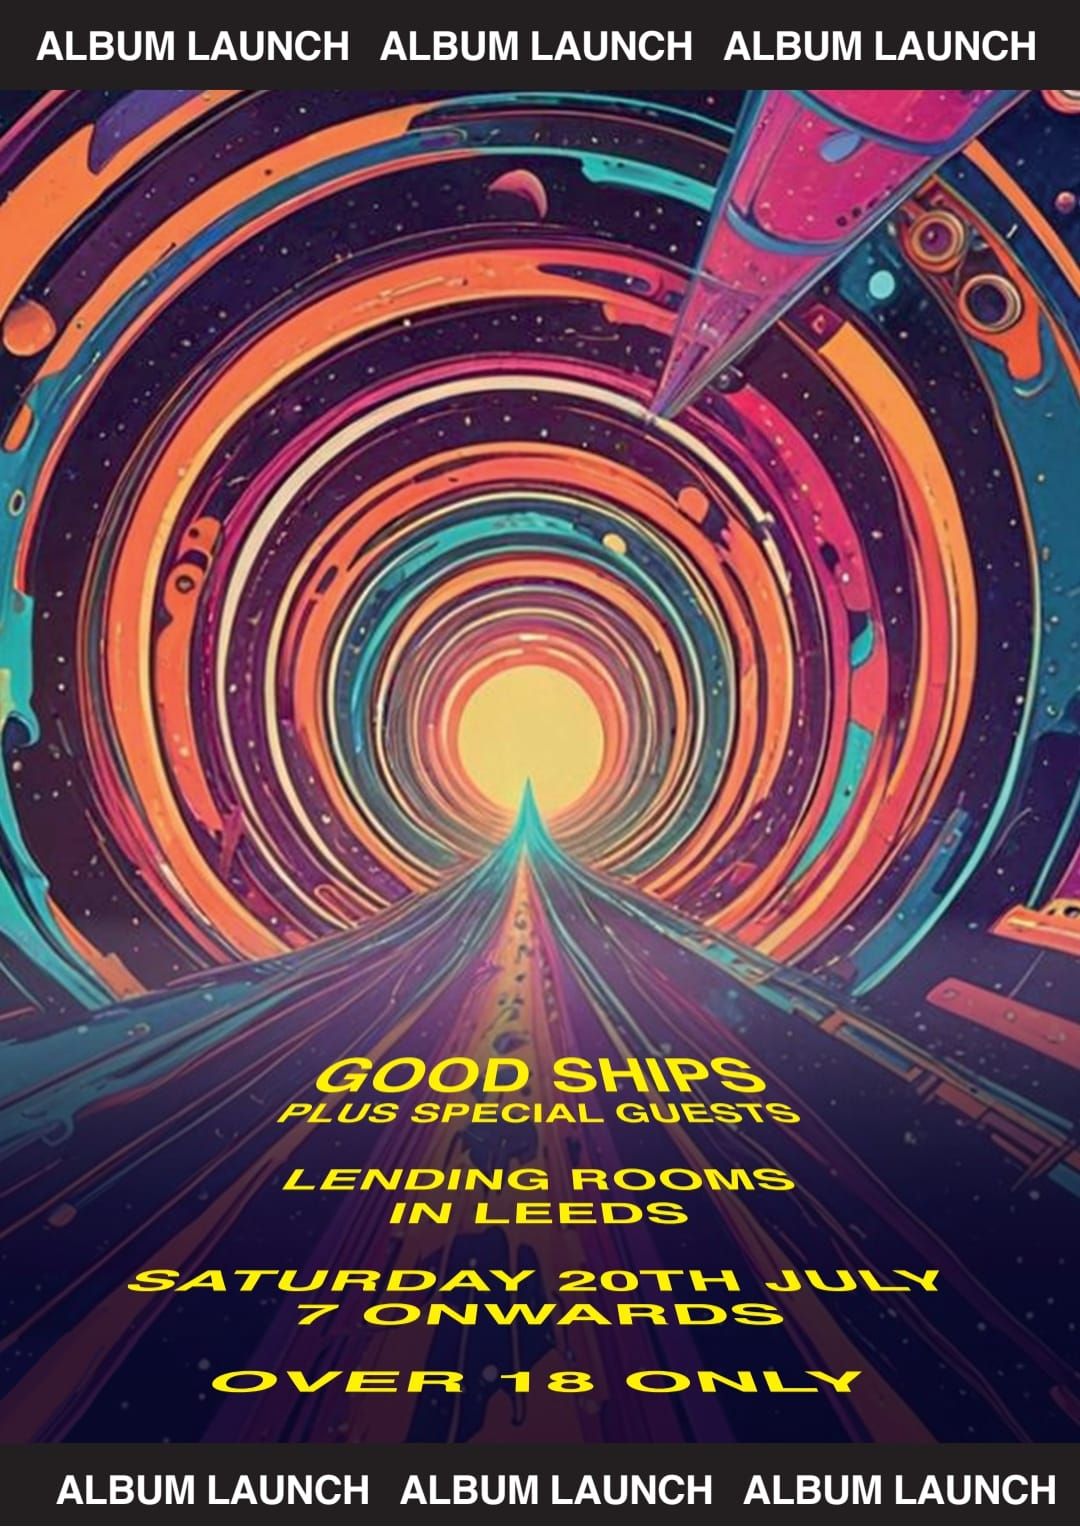 Good ships album launch 